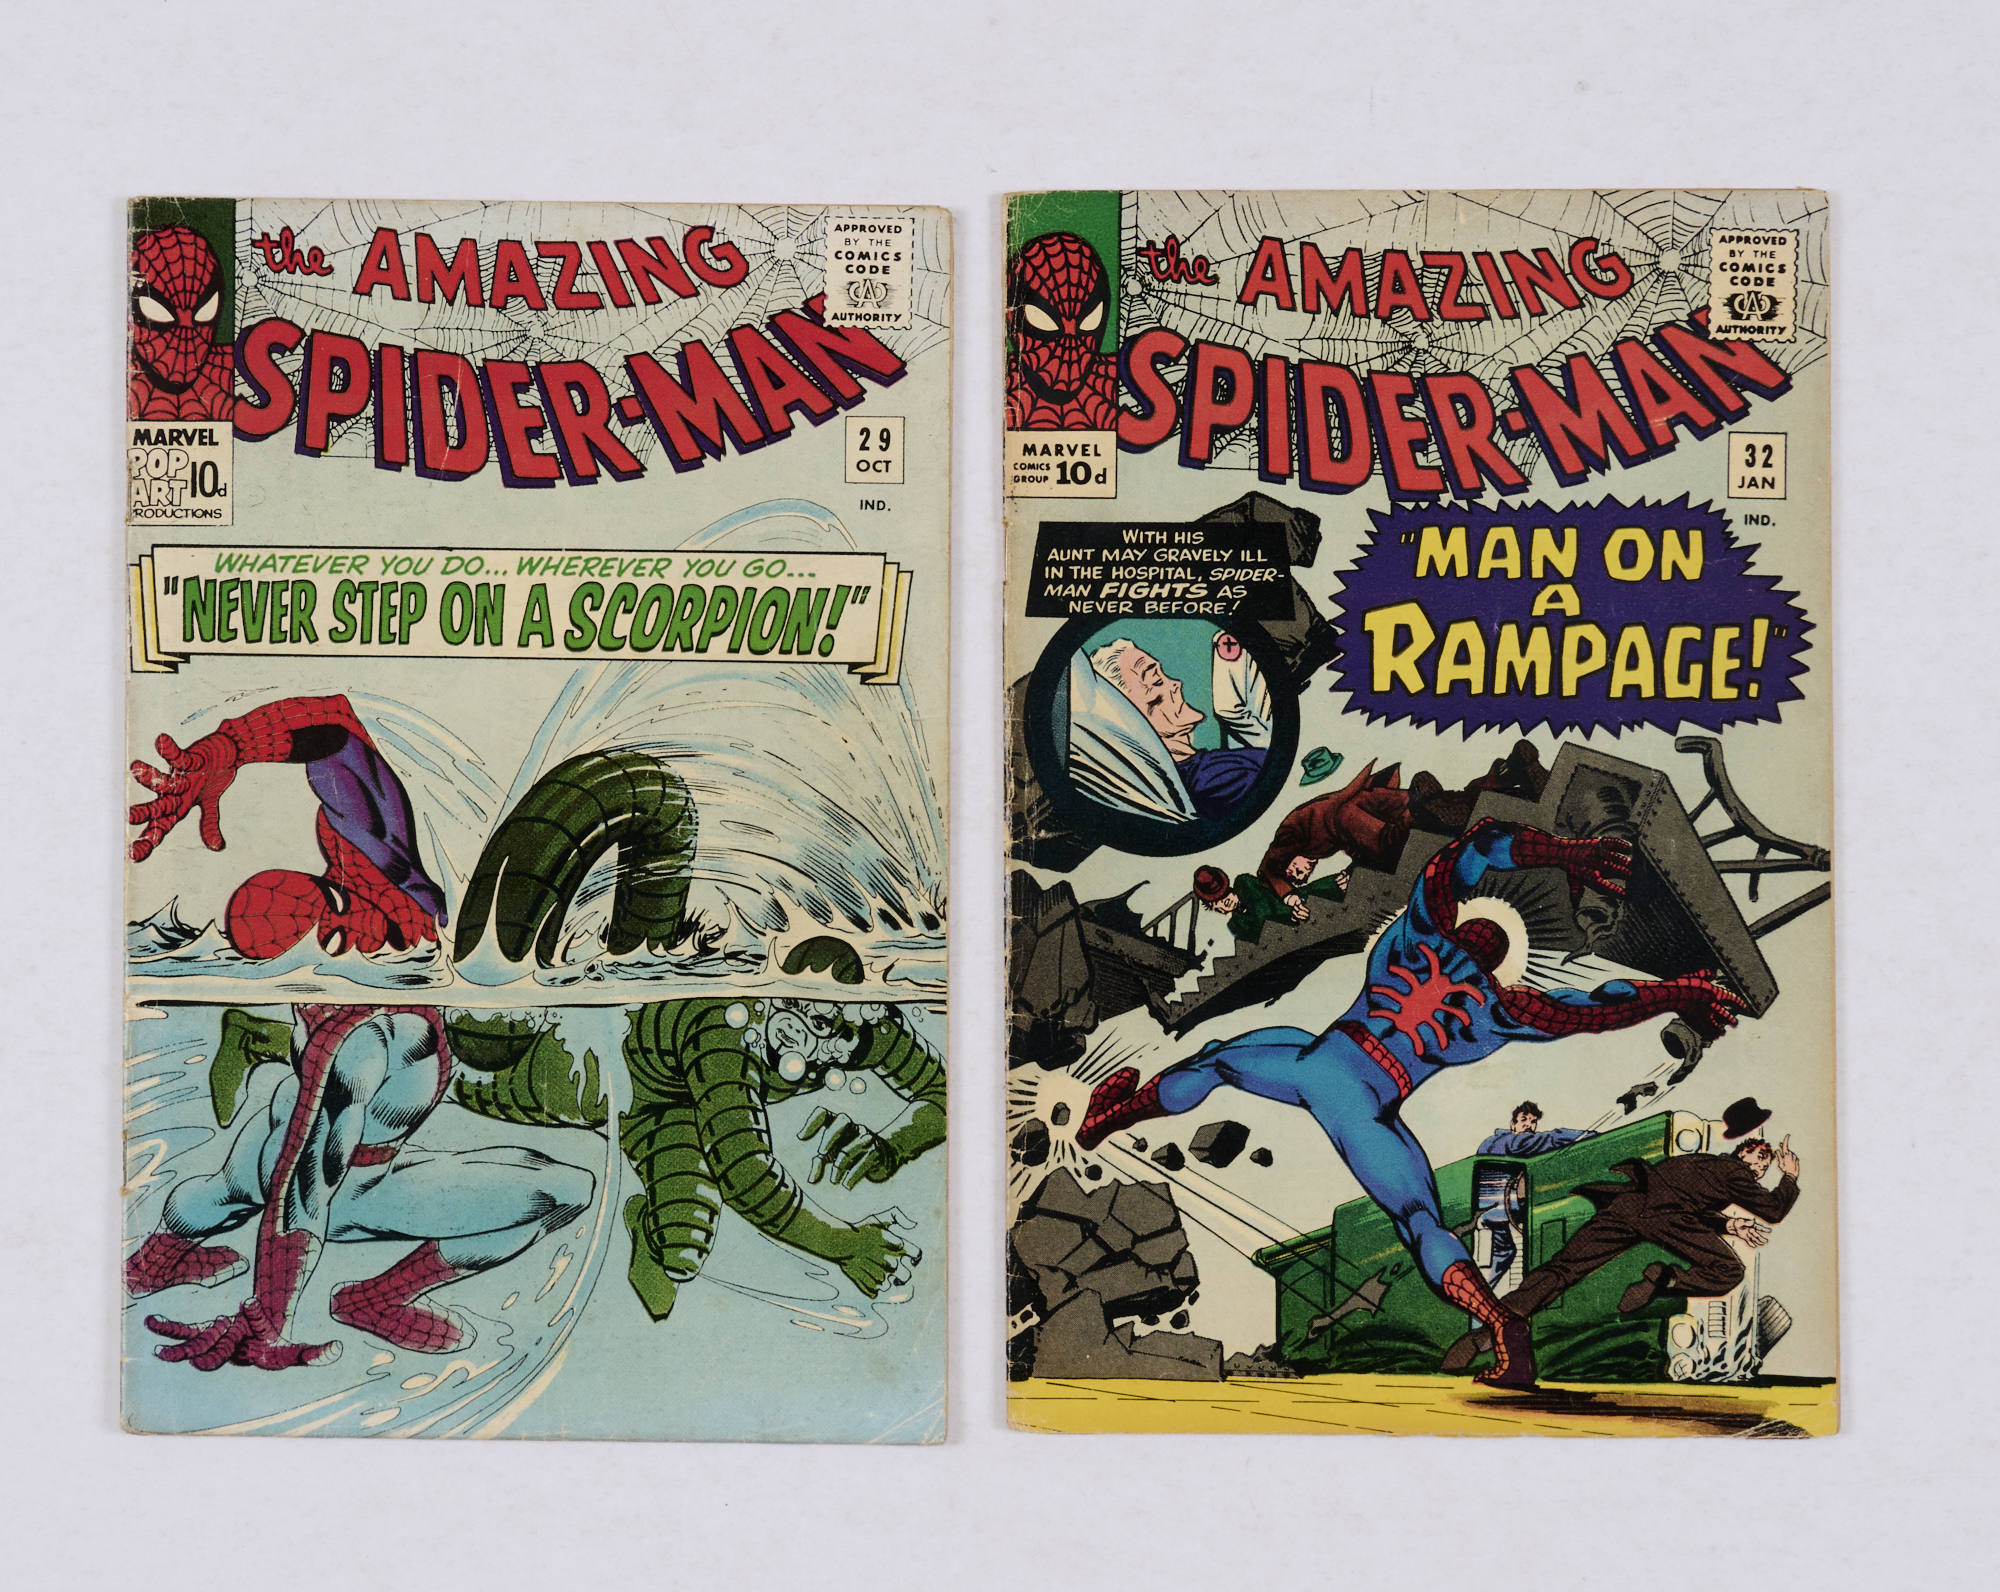 Amazing Spider-Man (1965-66) 29, 32 both [vg+] (2). No Reserve